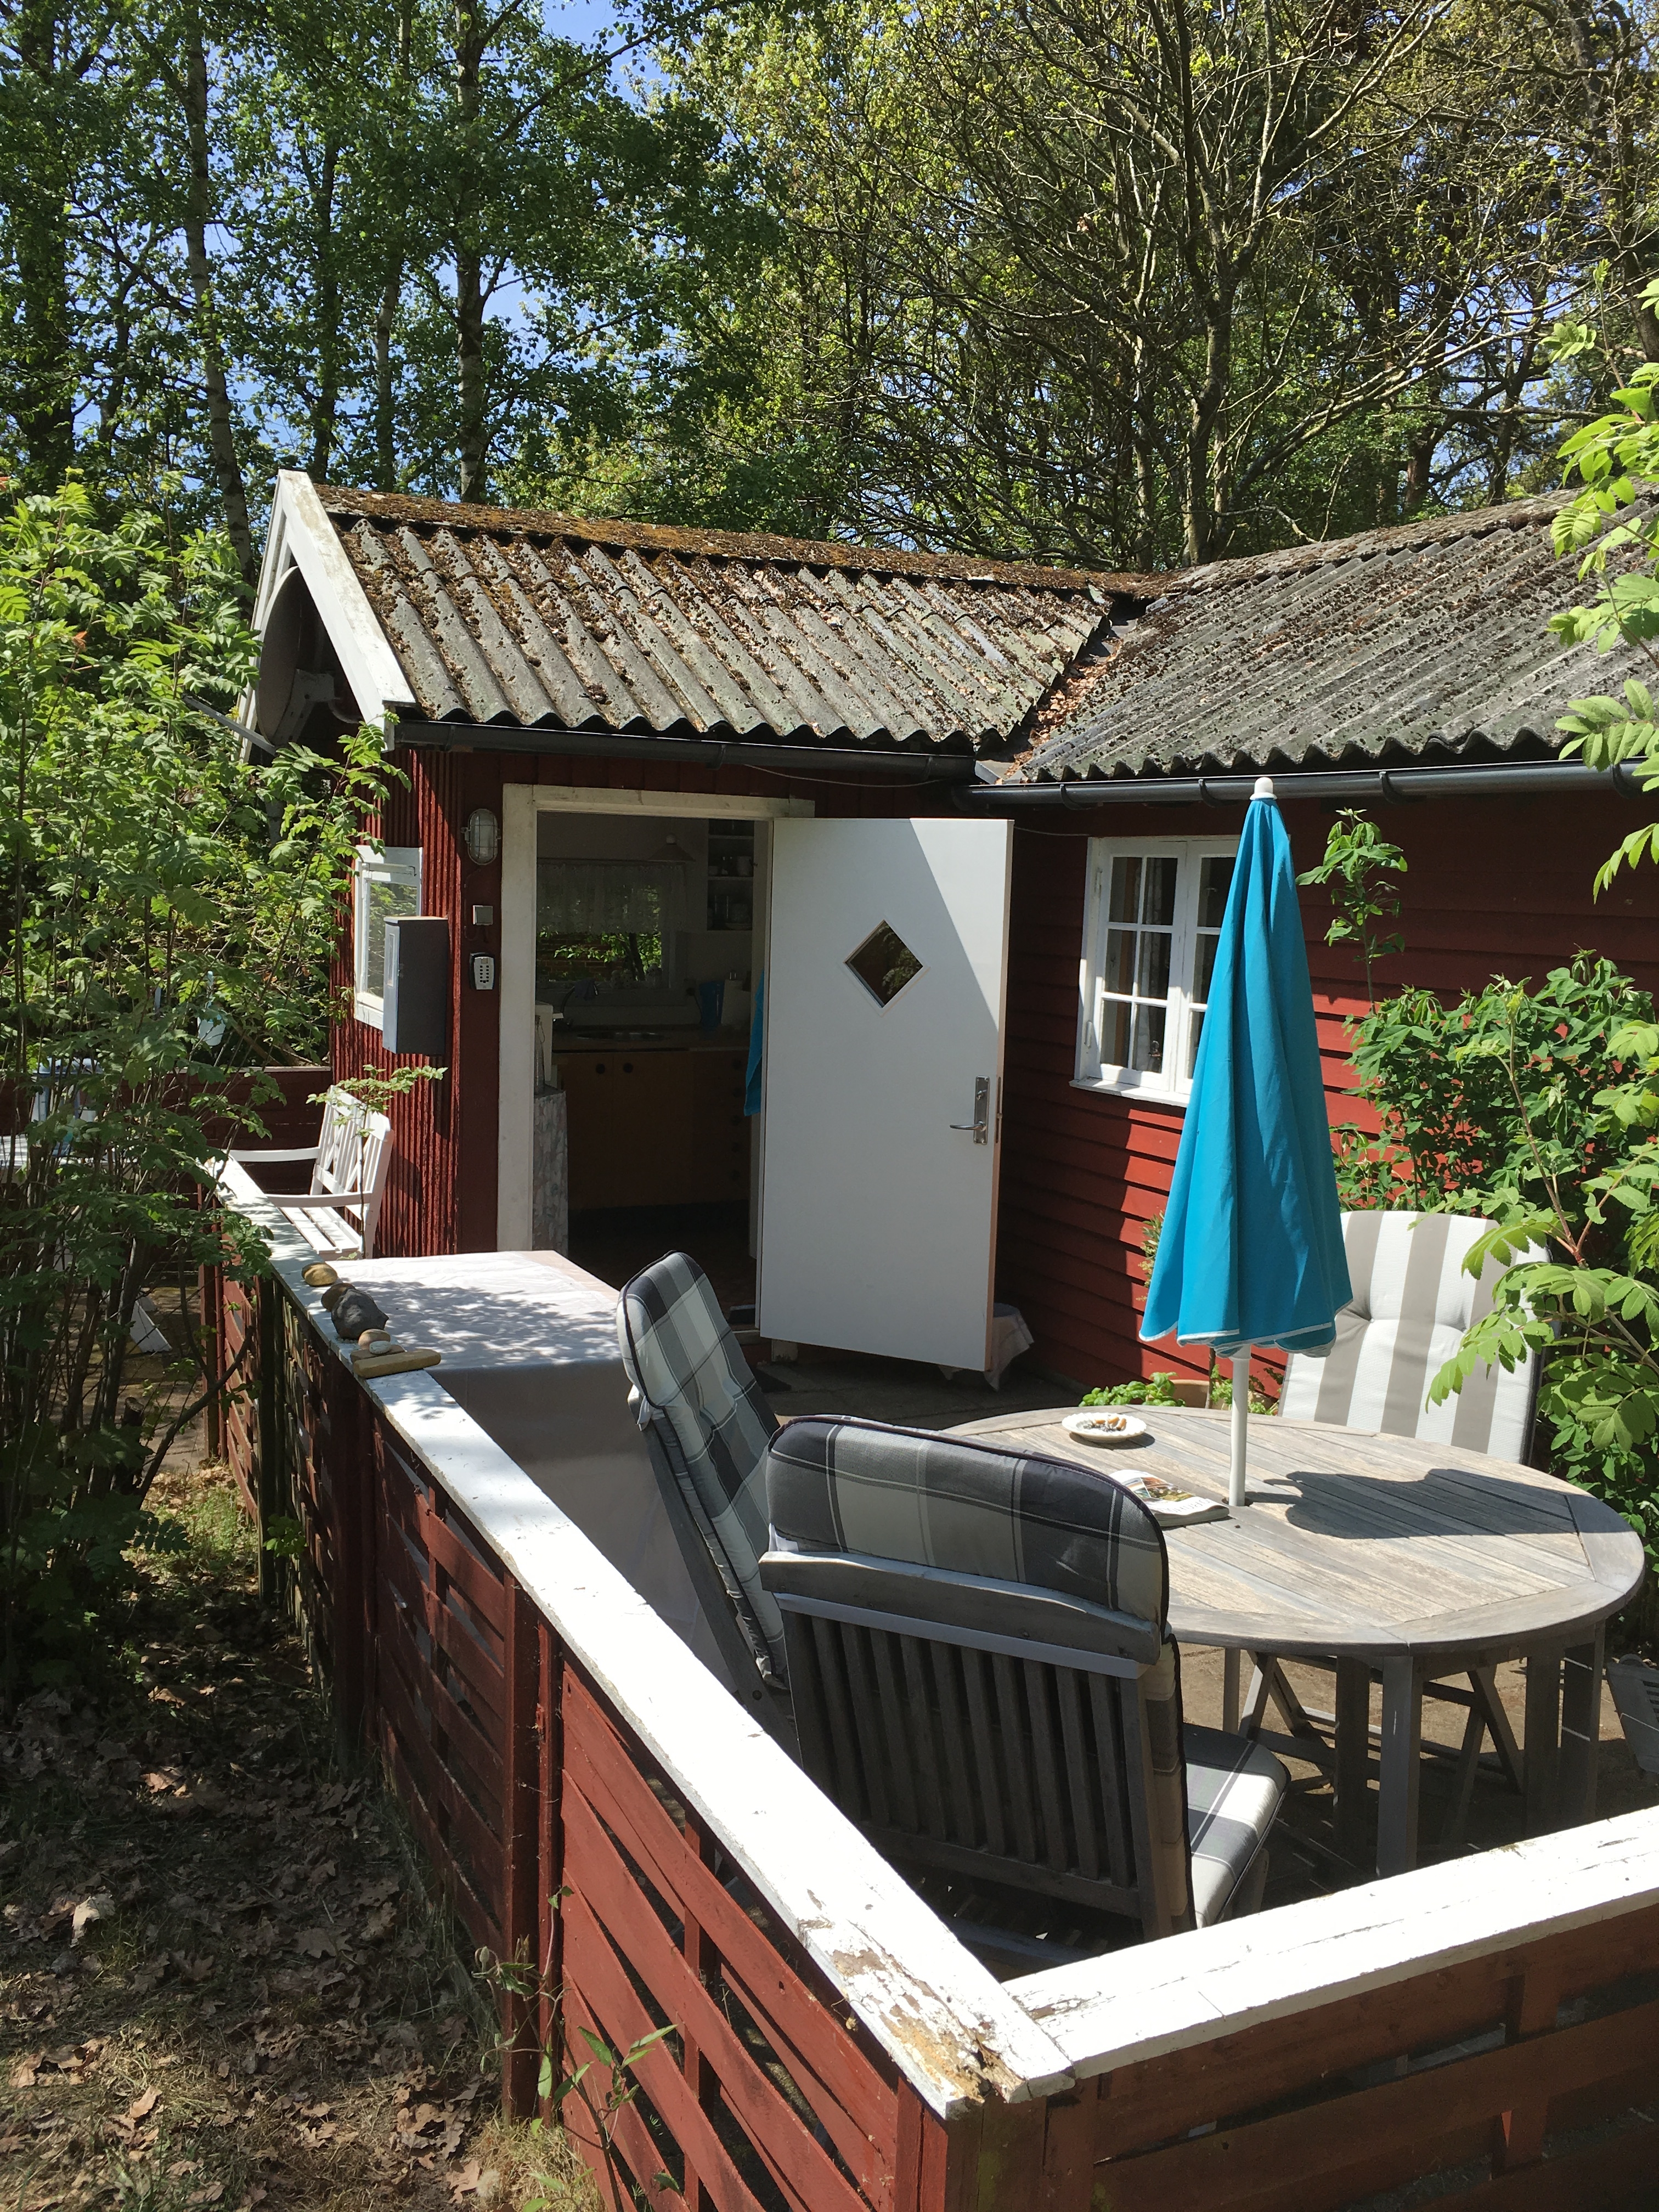 Hyggelig lille perle i skoven - Cottages for Rent in Hasle, Denmark